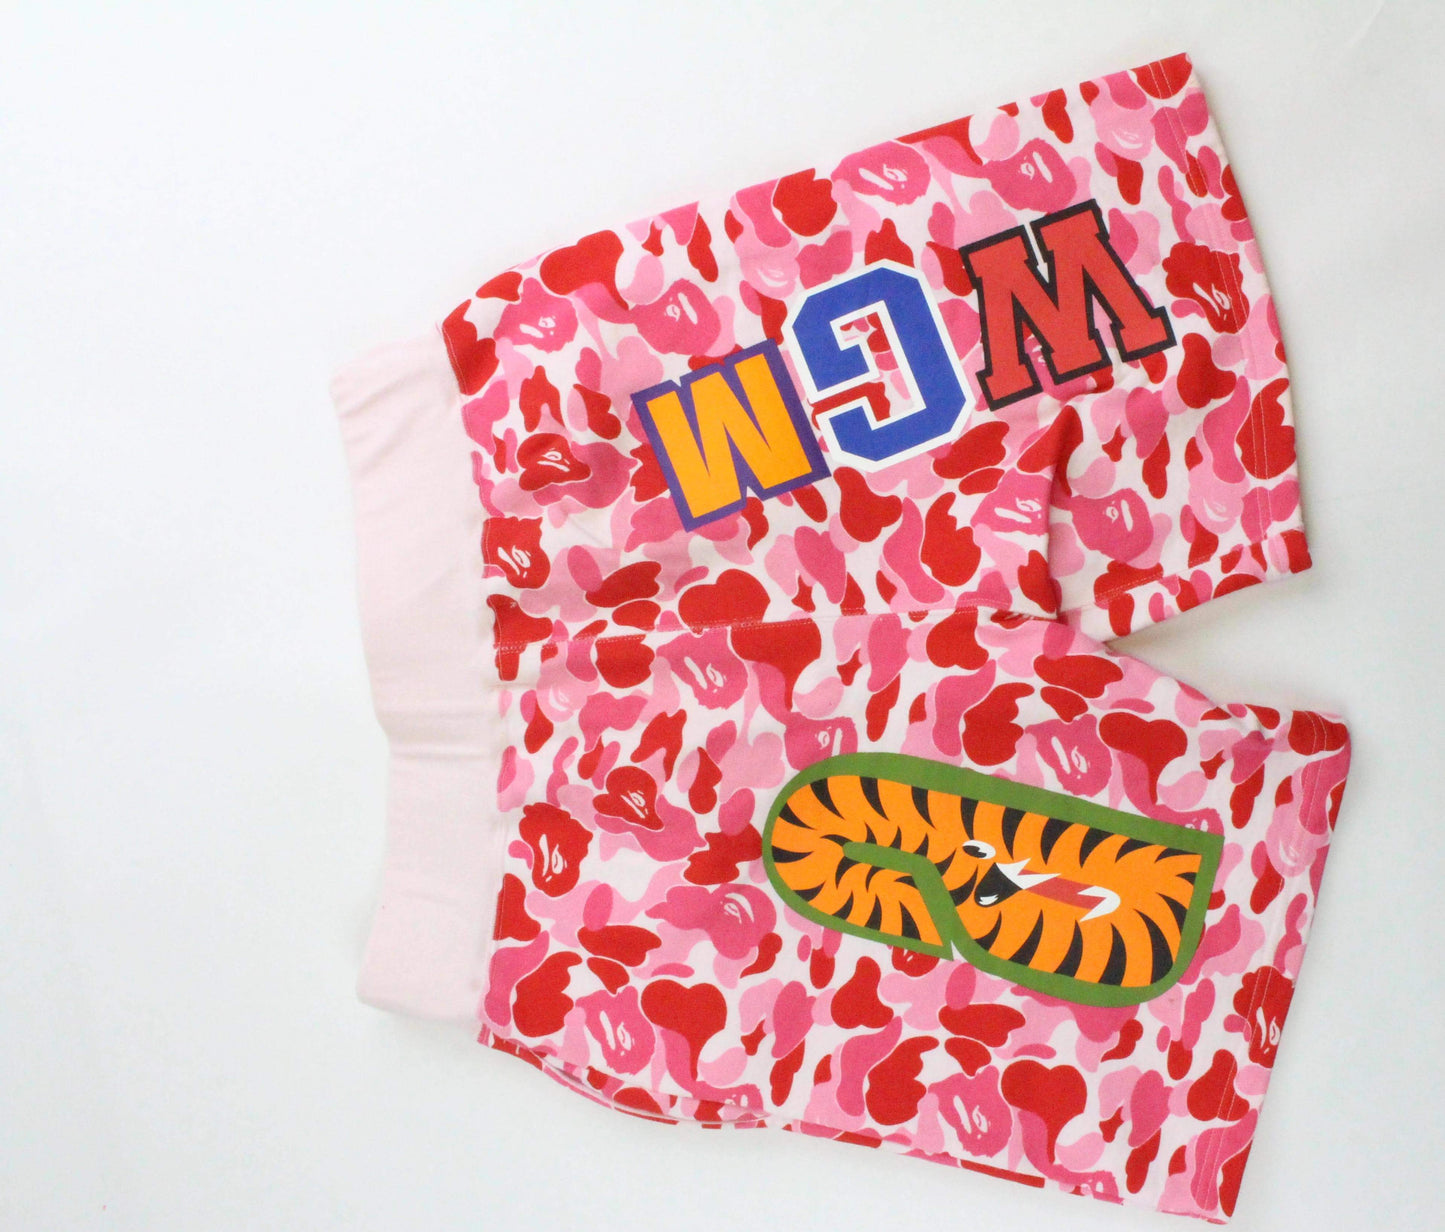 Bape Pink Camo Shark Shorts - SaruGeneral